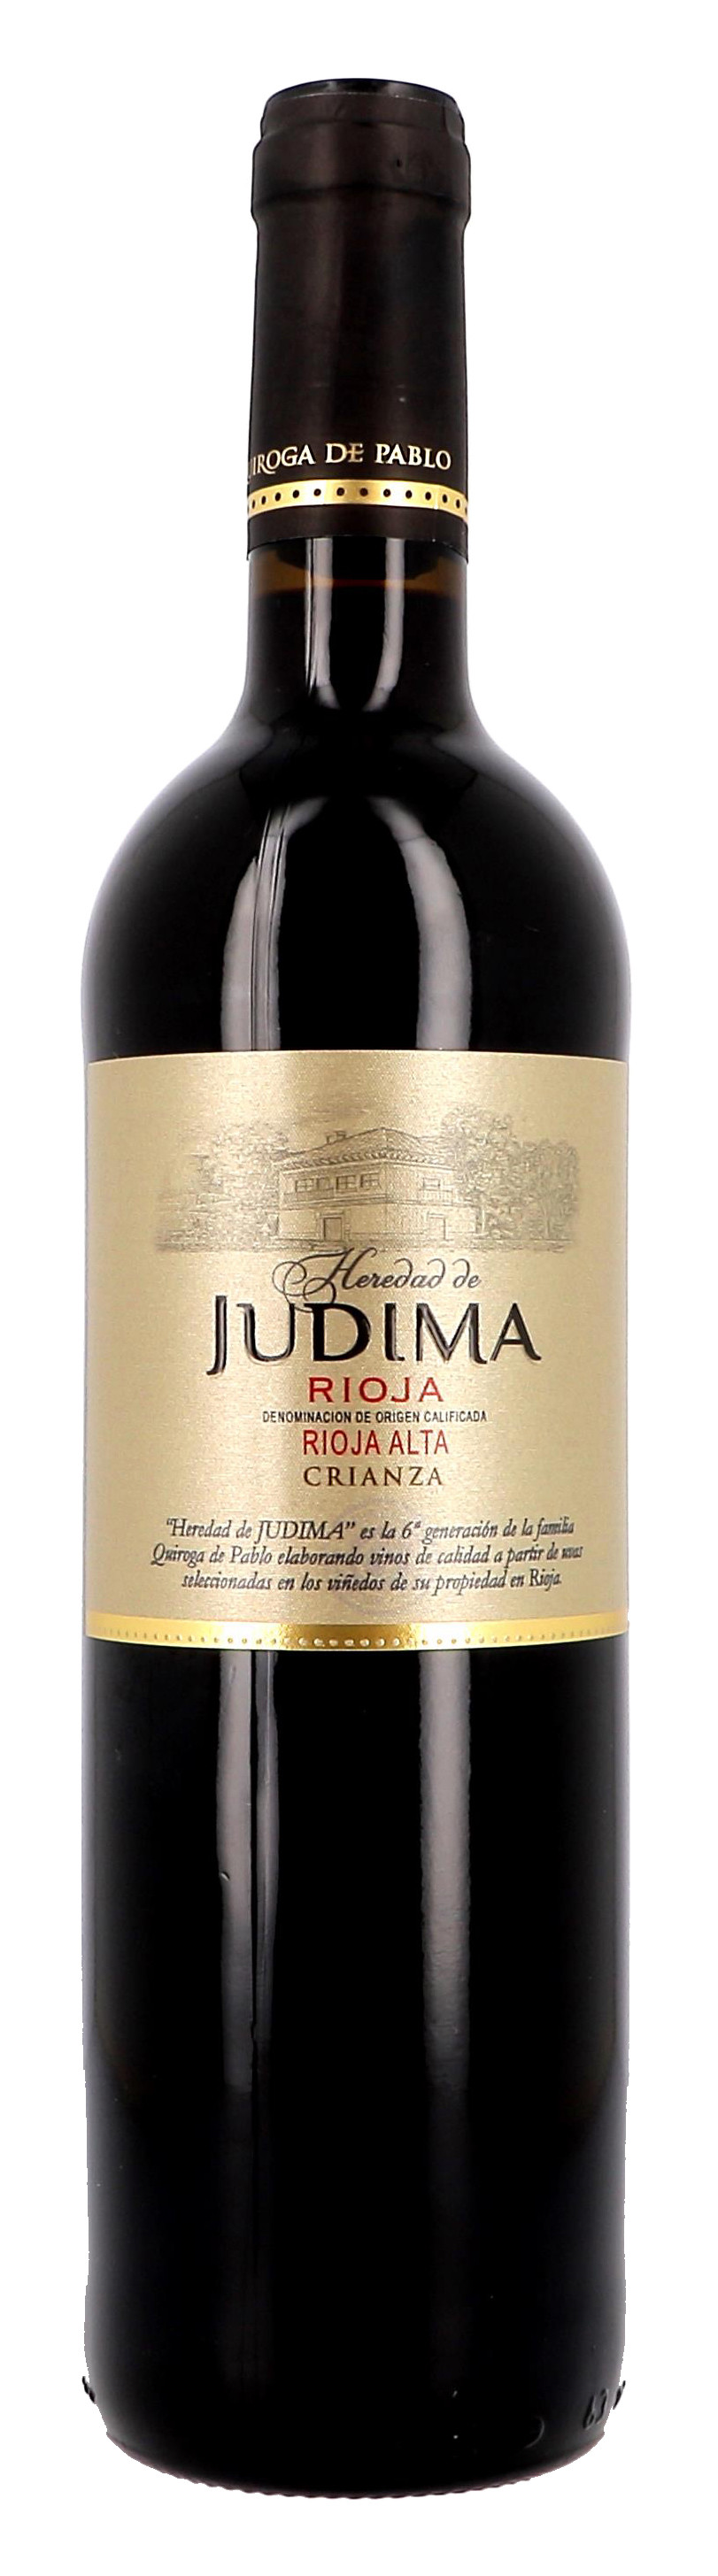 Heredad de Judima Crianza tinto 75cl 2015 Rioja Bodegas Quiroga de Pablo (Wijnen)